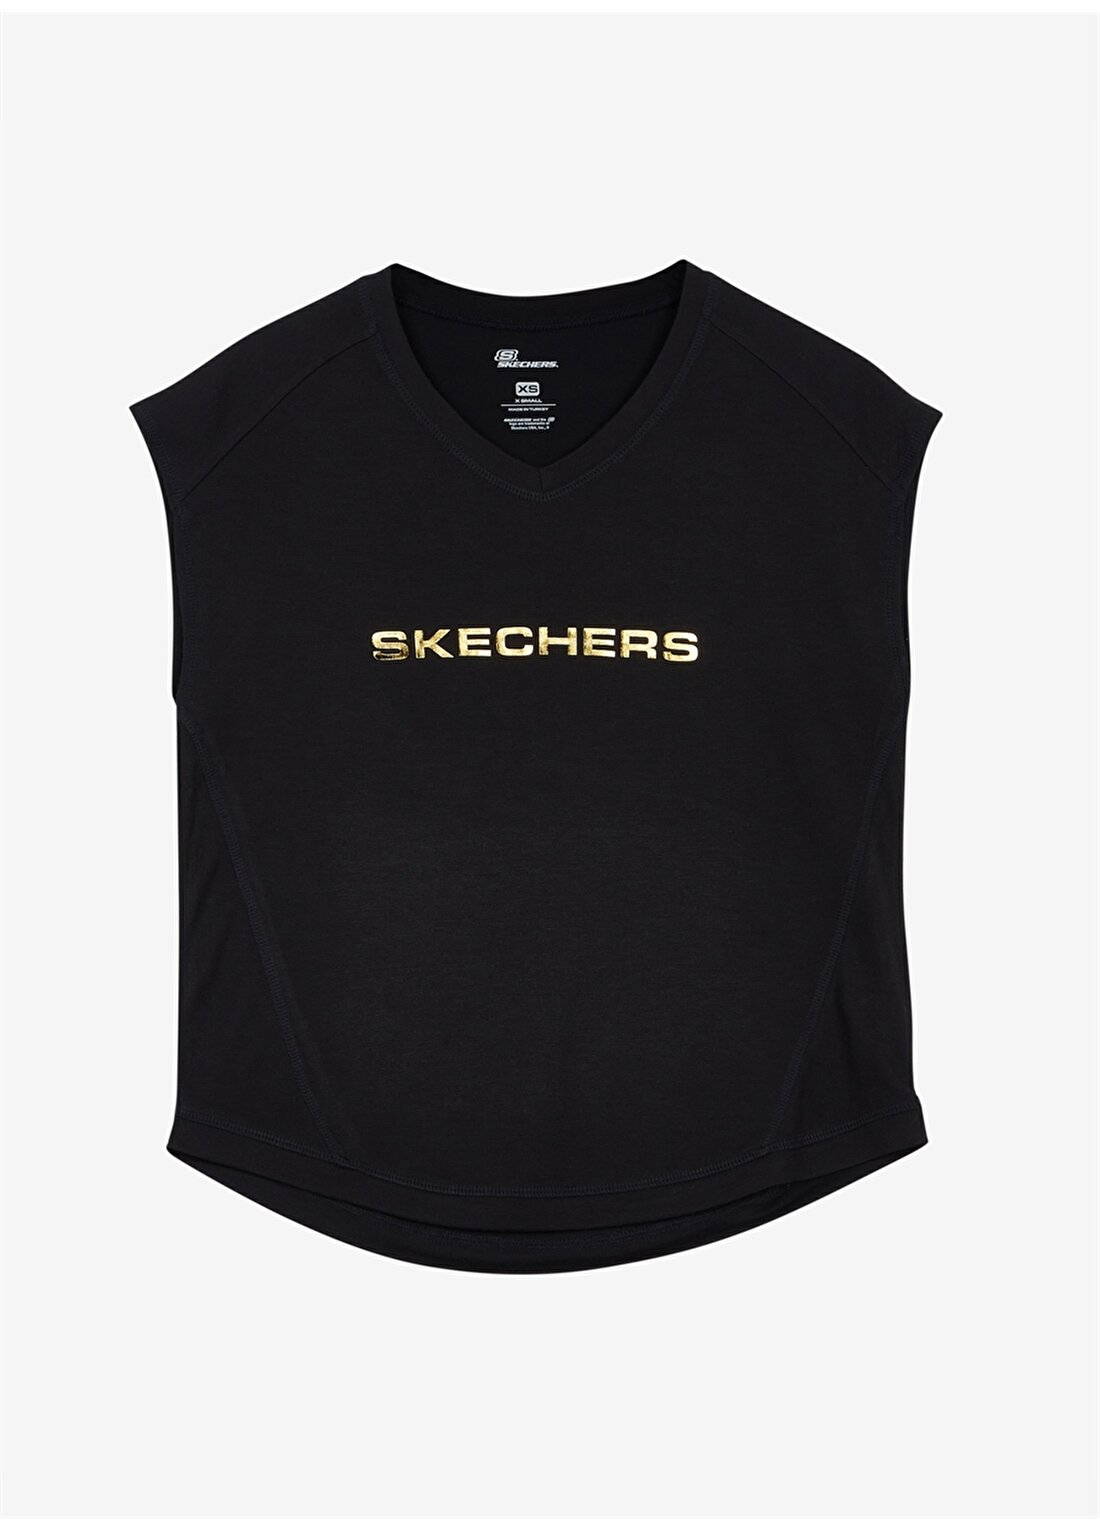 Skechers S211289-001 Graphic Crew Tee Bisiklet Yaka Normal Kalıp Düz Siyah Kadın T-Shirt